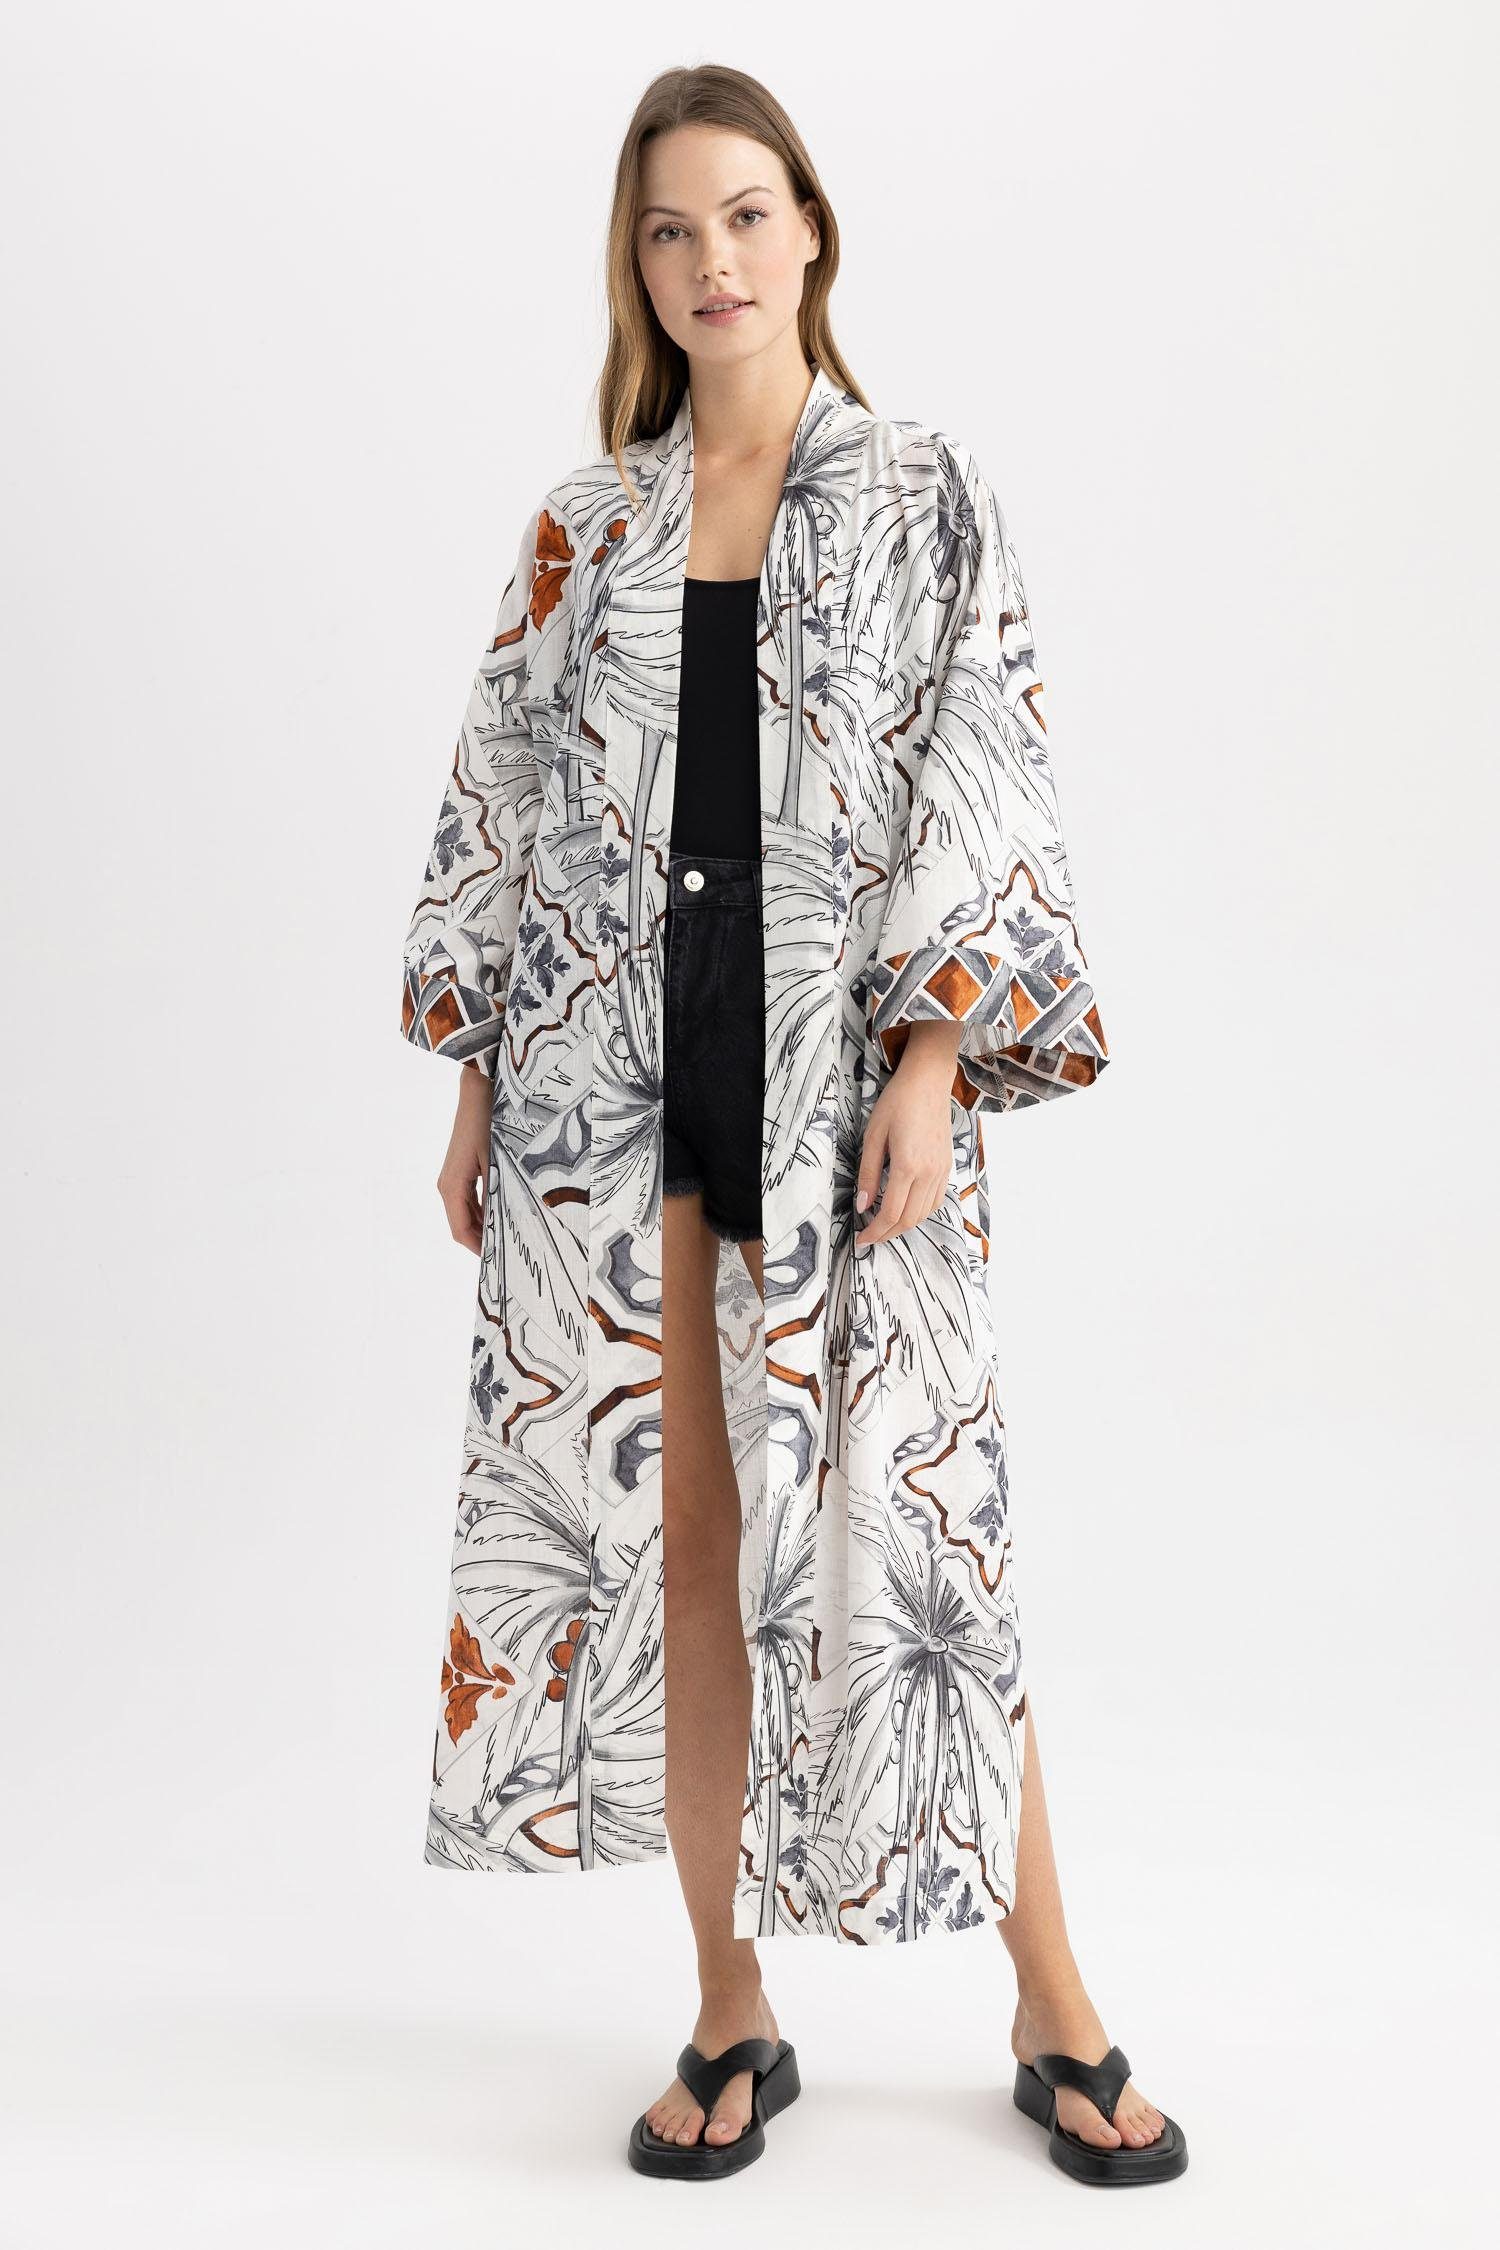 DeFacto Kimono Kimono REGULAR FIT, Baumwolle, ModelGrösse: XS/S,  Körpergrösse: 1.77, Brust: 79, Taille: 59, Hüfte: 89